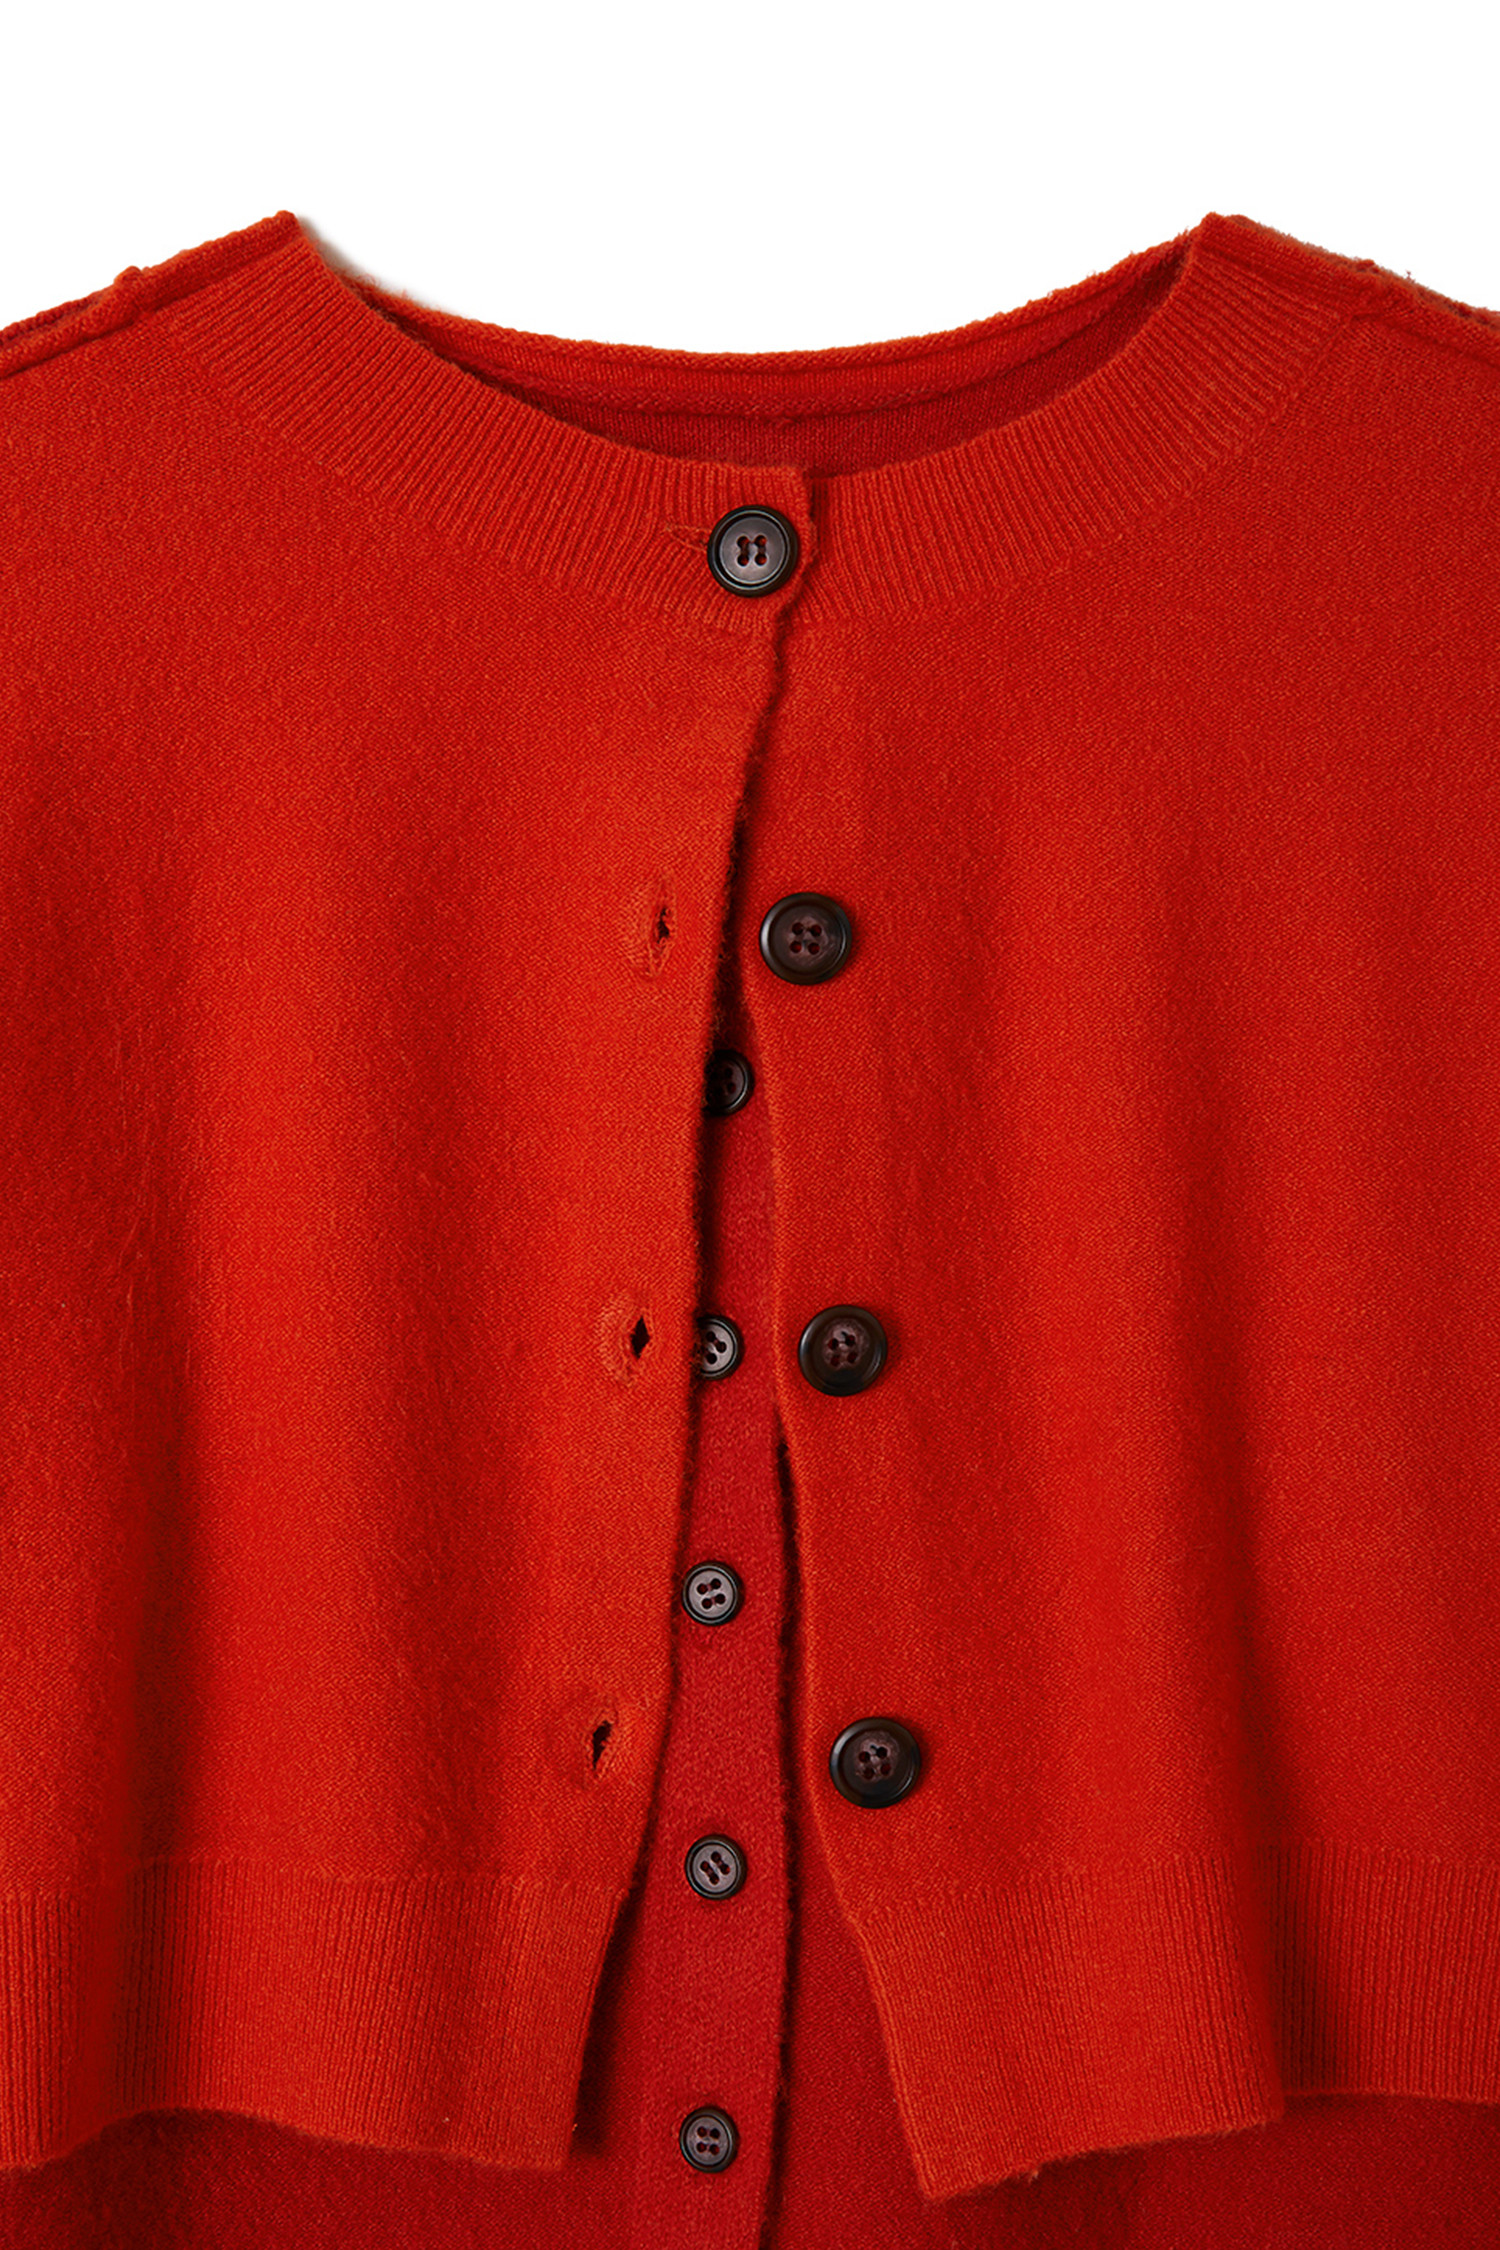 PERVERZE] Stitching Double Cardigan - Red_PERVERZE